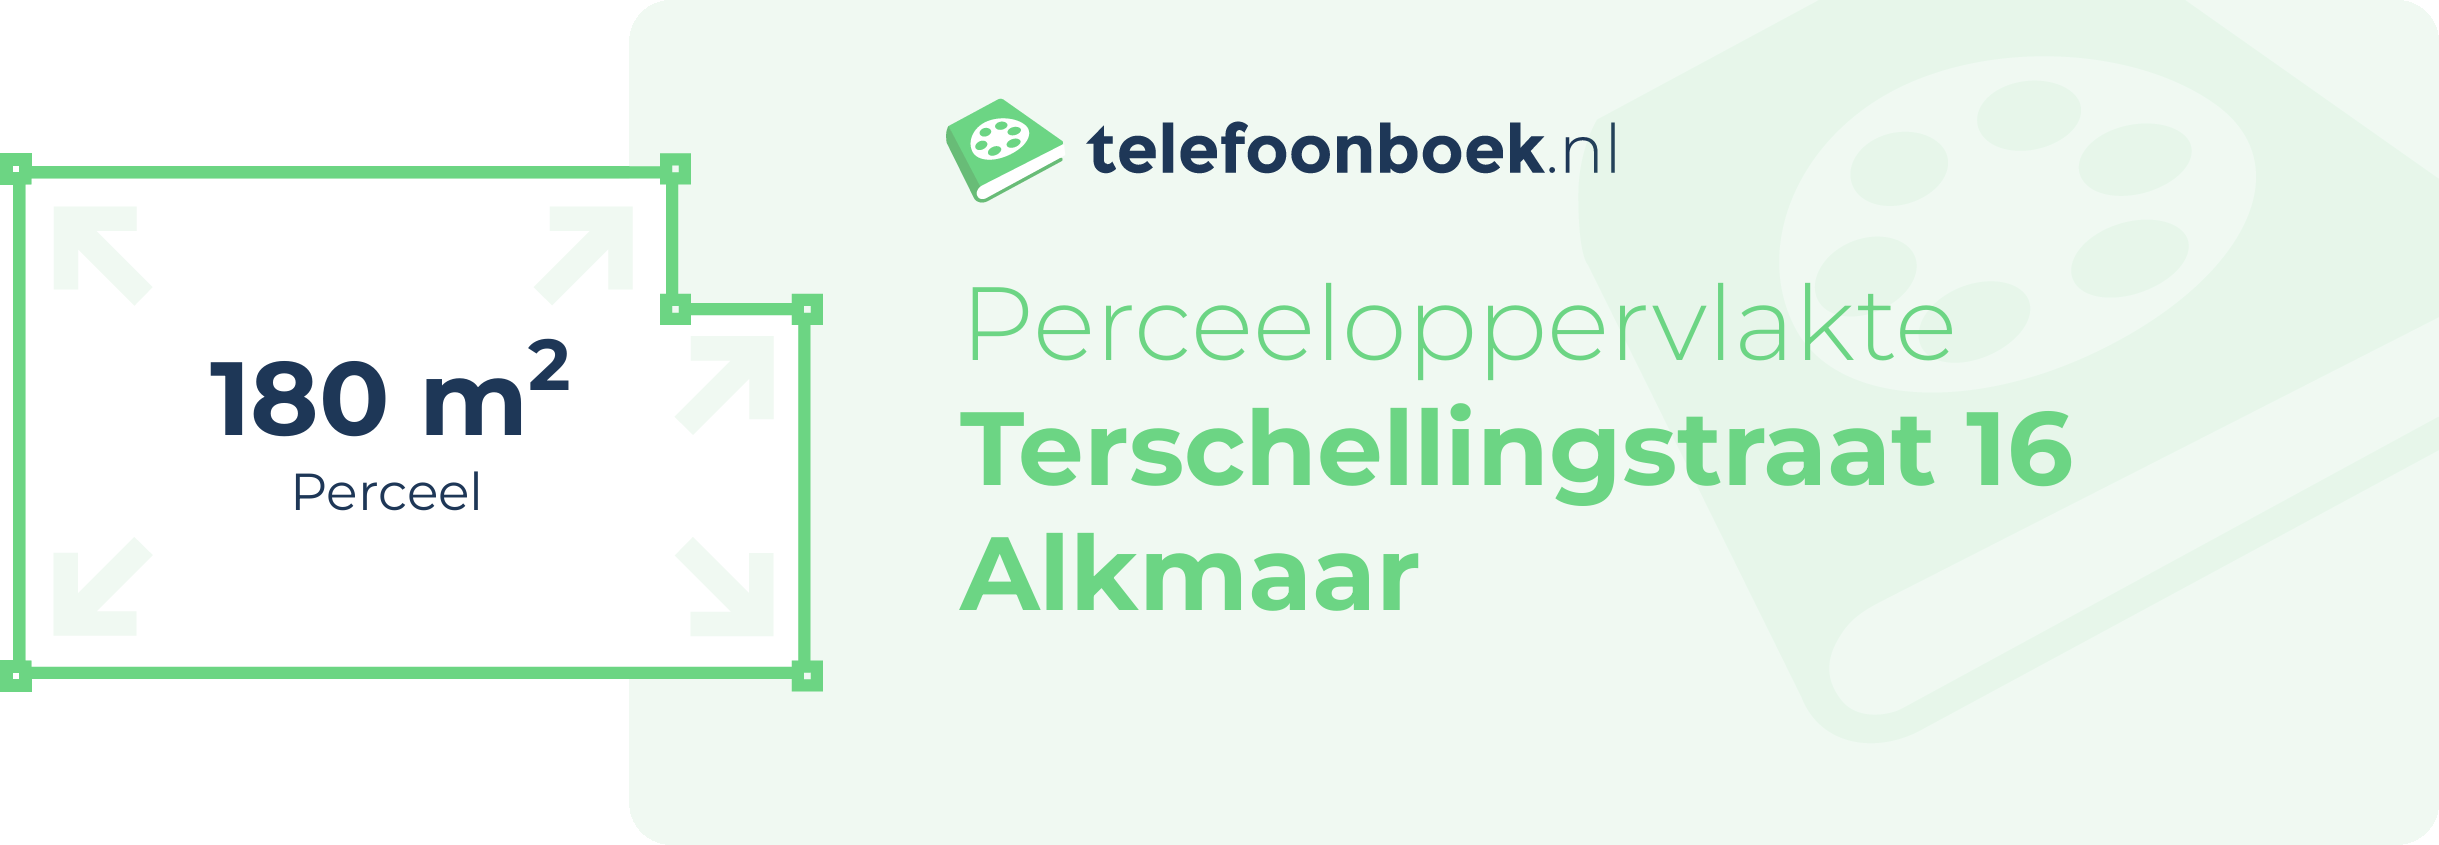 Perceeloppervlakte Terschellingstraat 16 Alkmaar